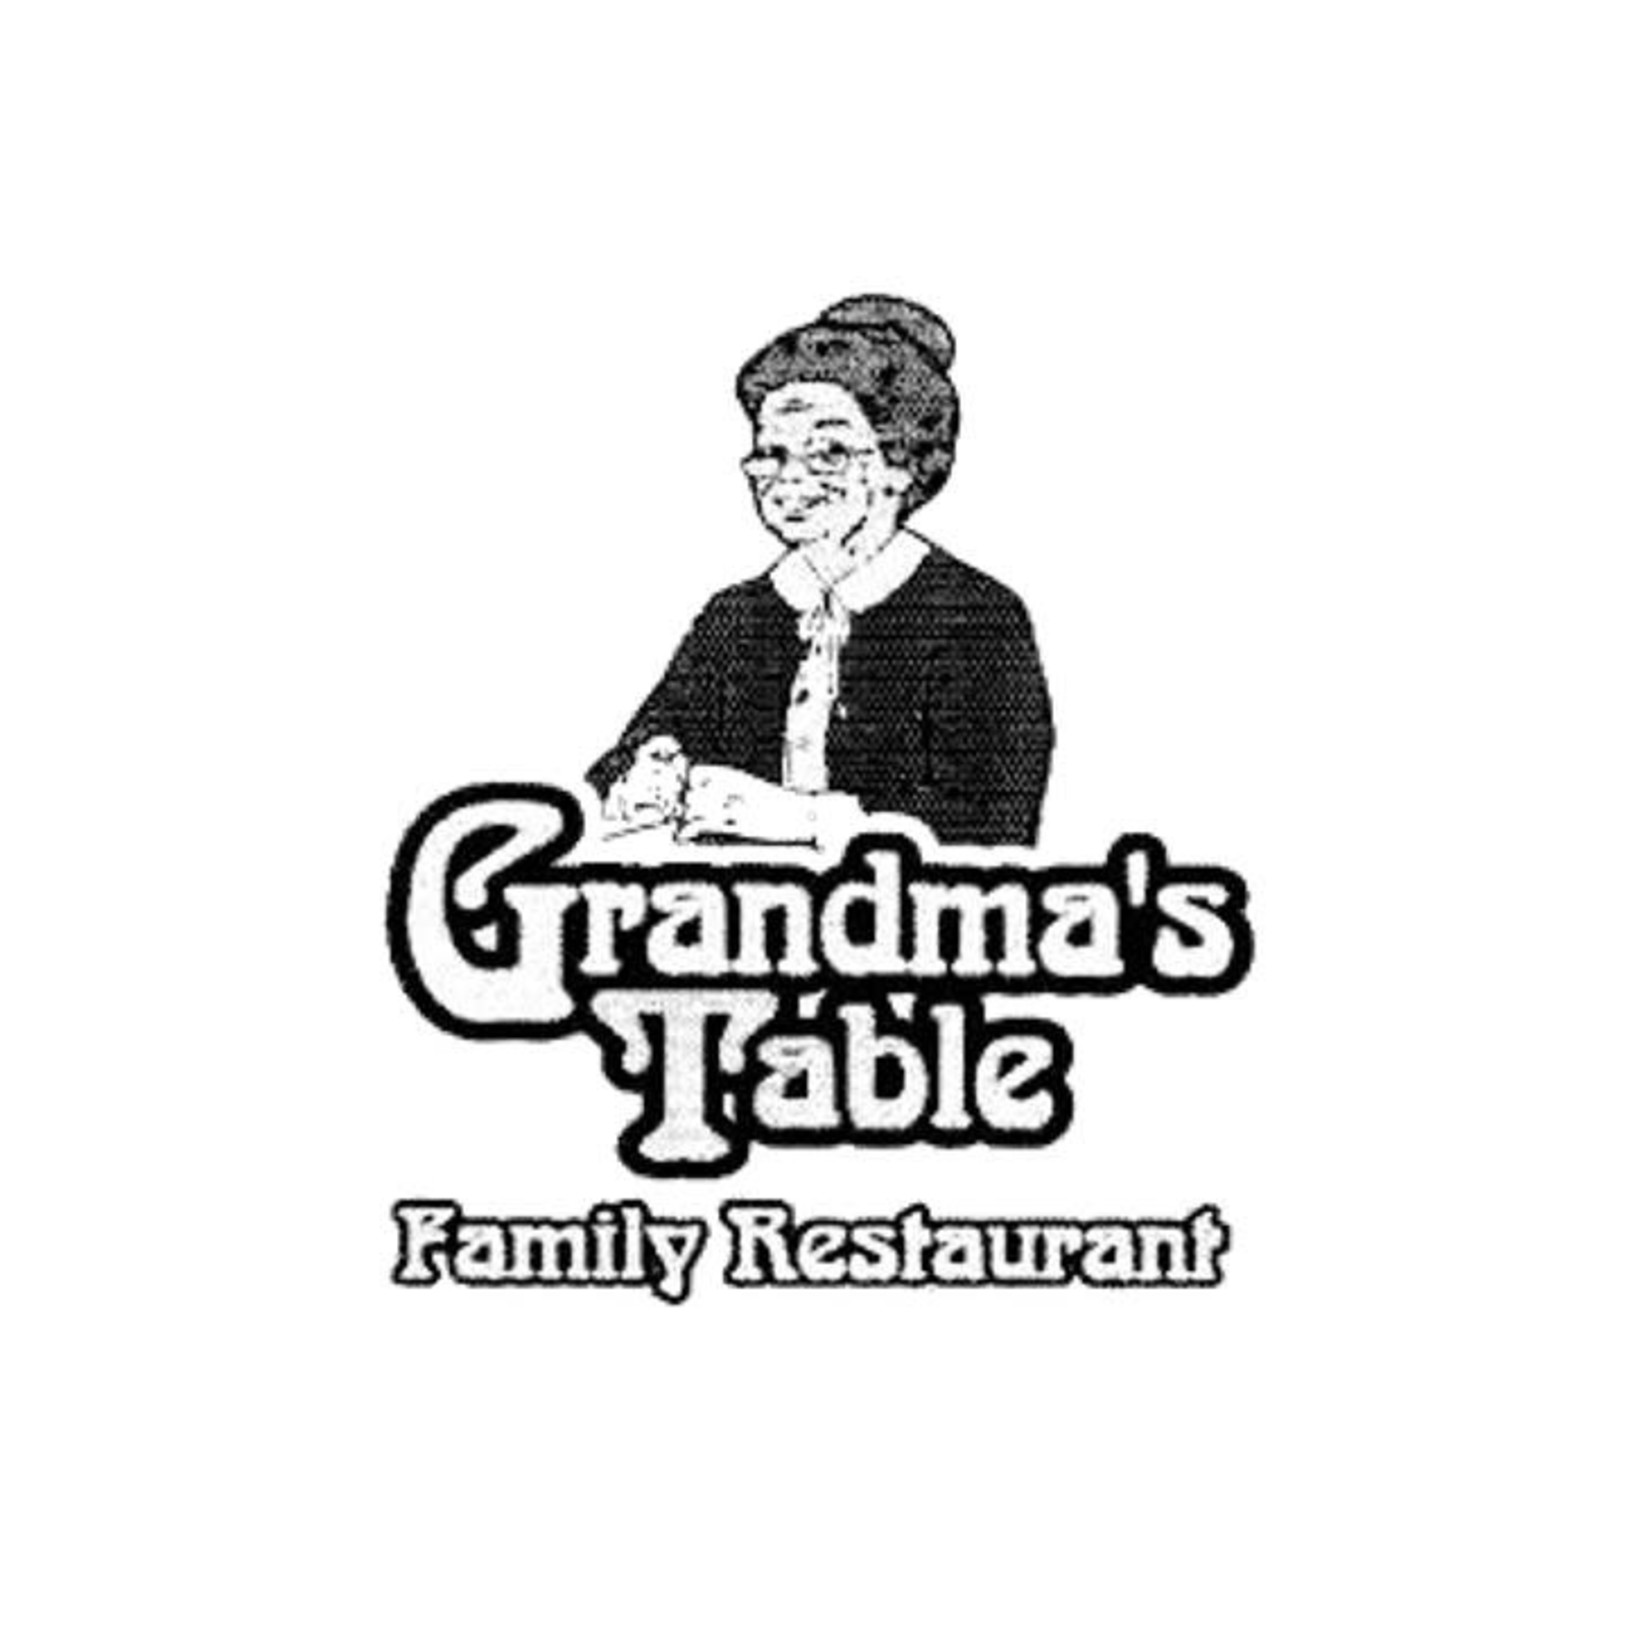 Grandma's Table-Montgomery Grandma's Table-Montgomery $5.00 Dining Certificate